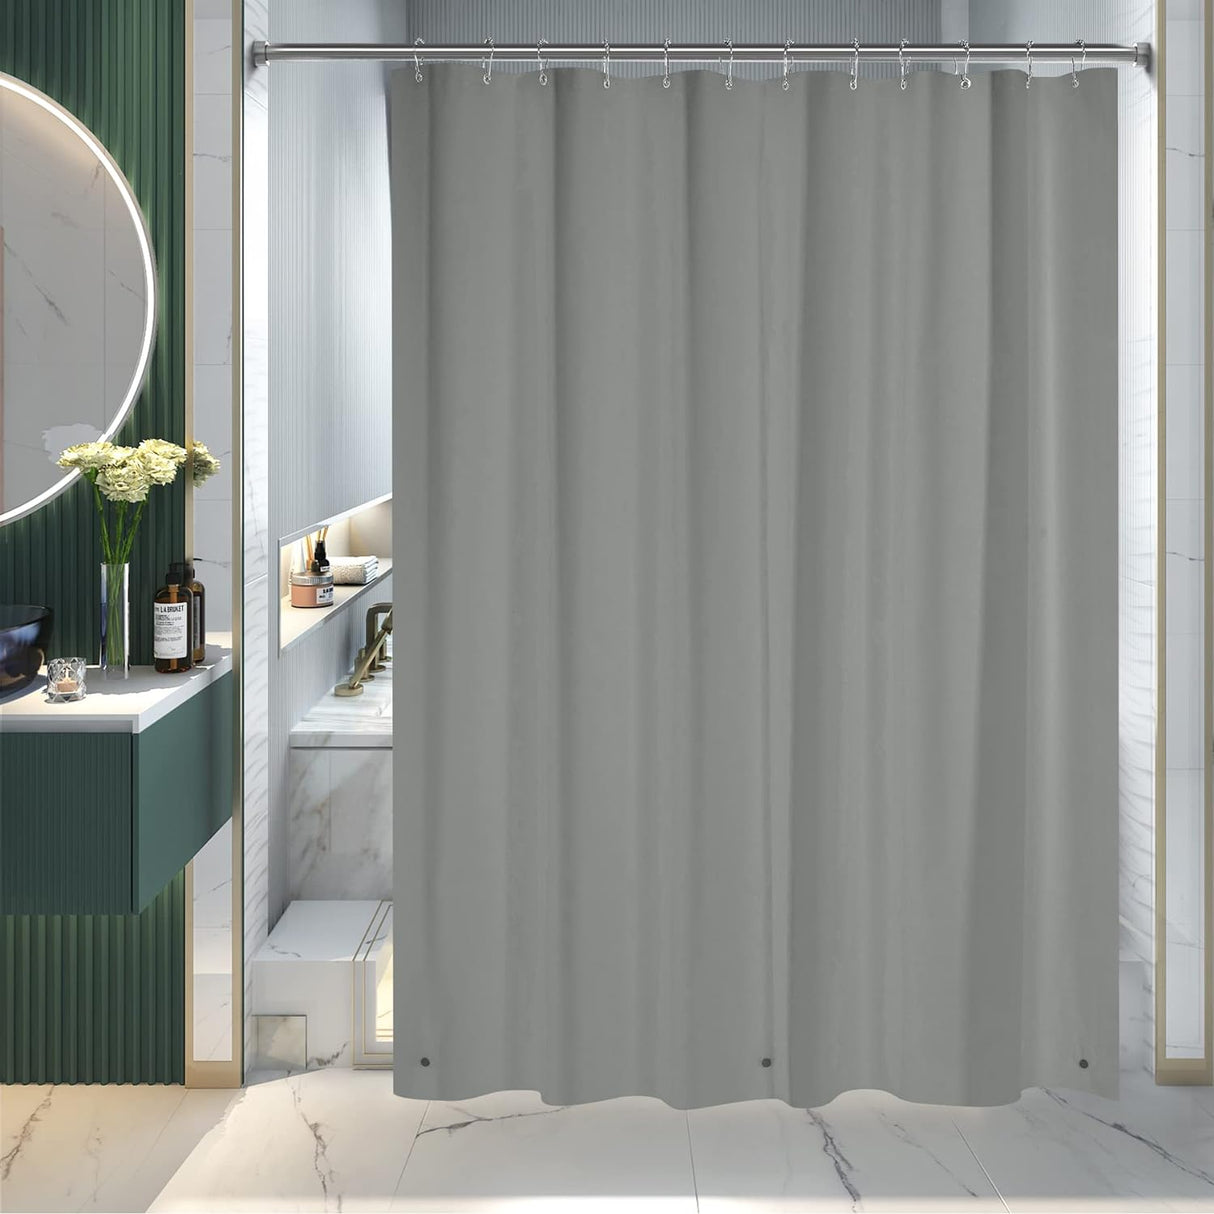 Acrylic Big Round Transparent Shower Curtain Rings Hooks, 12 Pcs